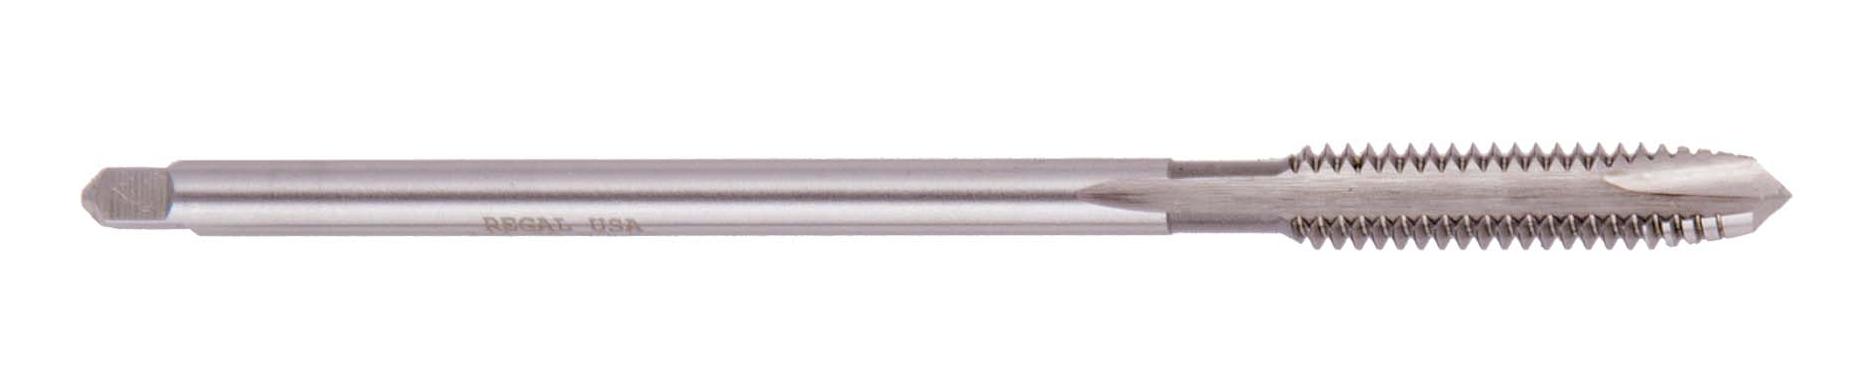 Small Shank Extension Titan TT94104 High Speed Steel Spiral Point Plug Tap 0.136 Shank Diameter 7/8 Thread Length H3 Limit 6 Overall Length 10-32